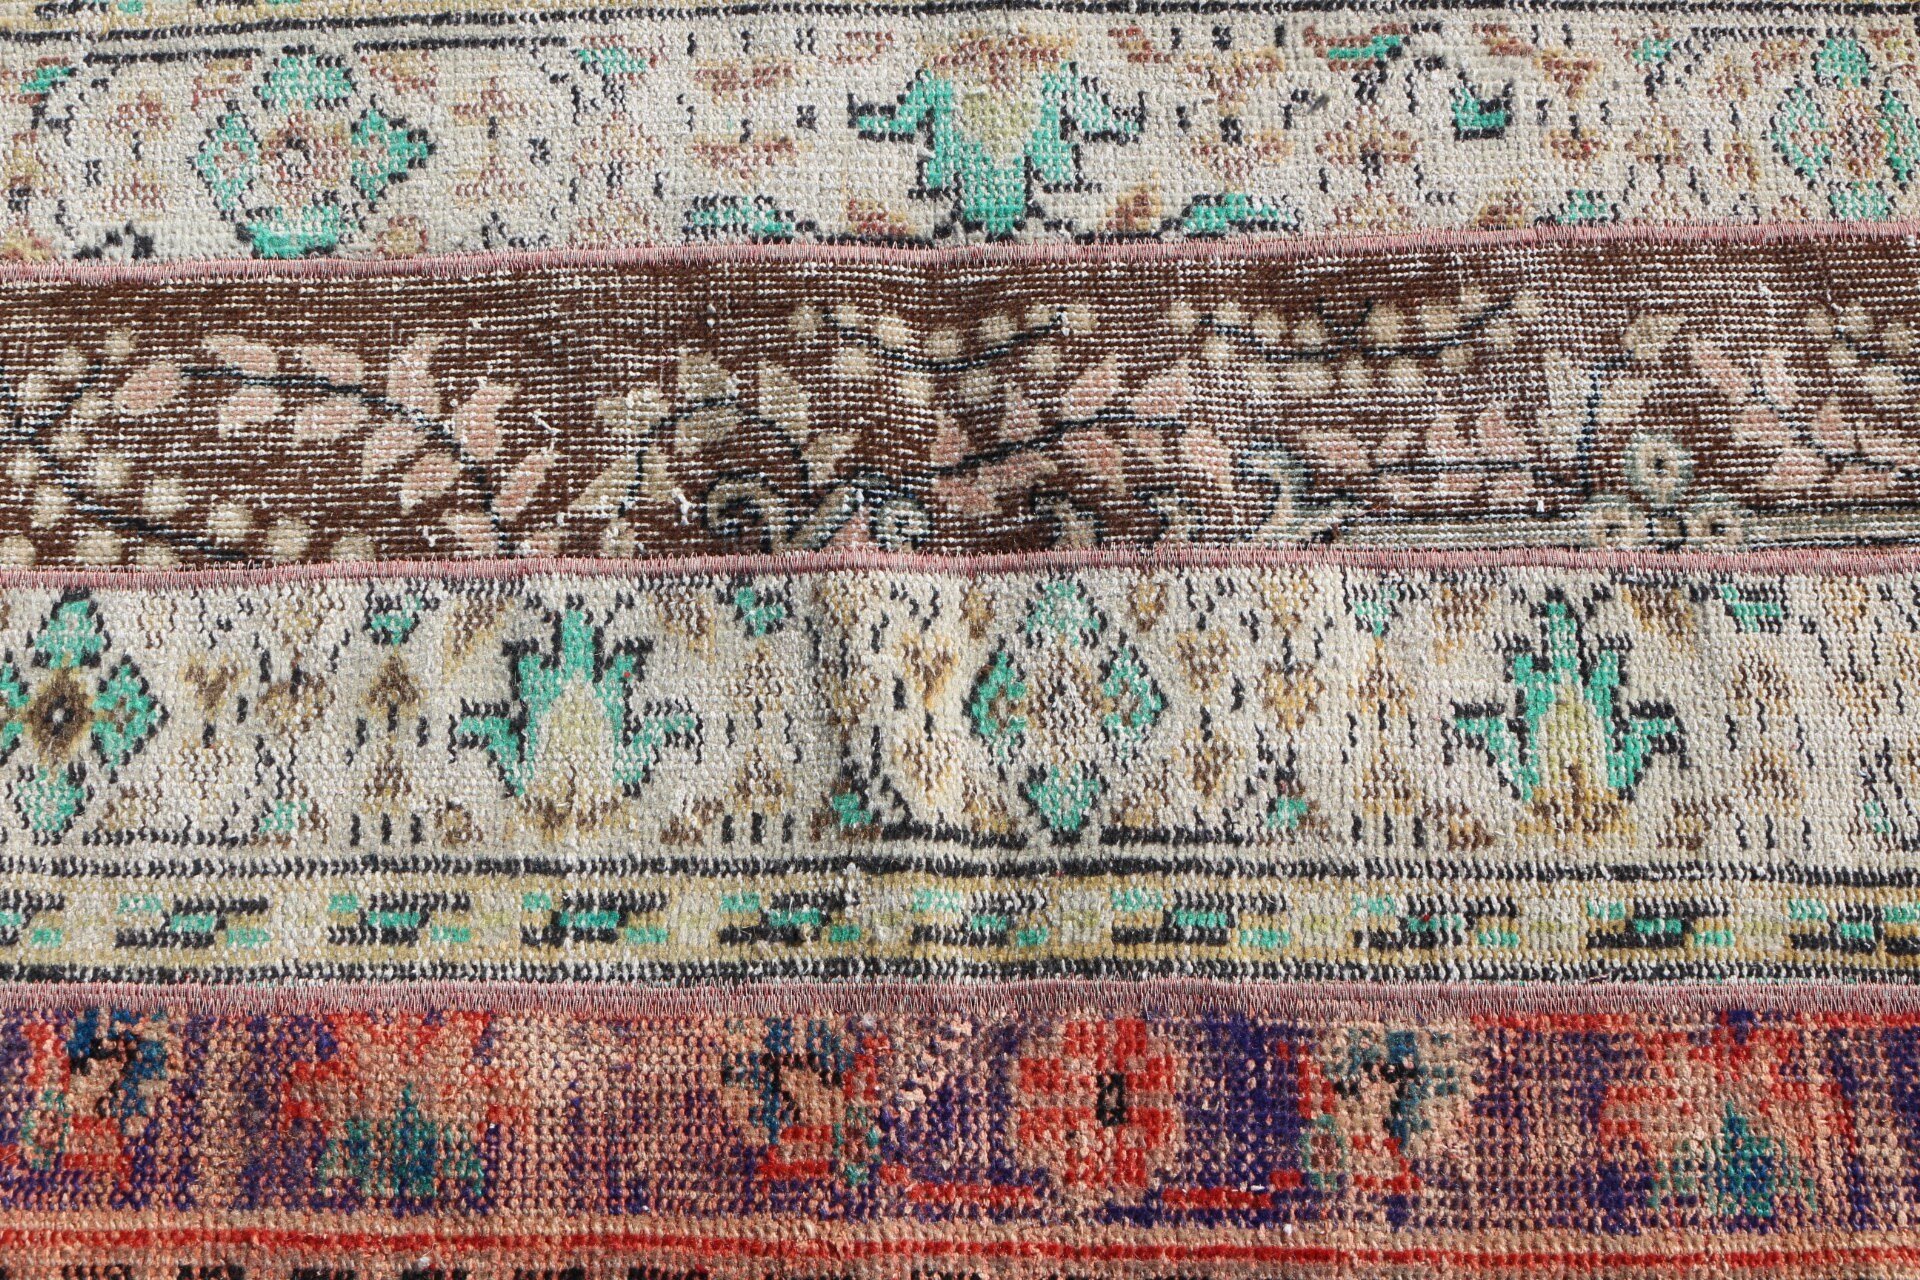 Turkish Rugs, Antique Rug, 2.3x3.4 ft Small Rugs, Brown Home Decor Rug, Bedroom Rug, Wall Hanging Rugs, Nursery Rugs, Vintage Rugs, Old Rug